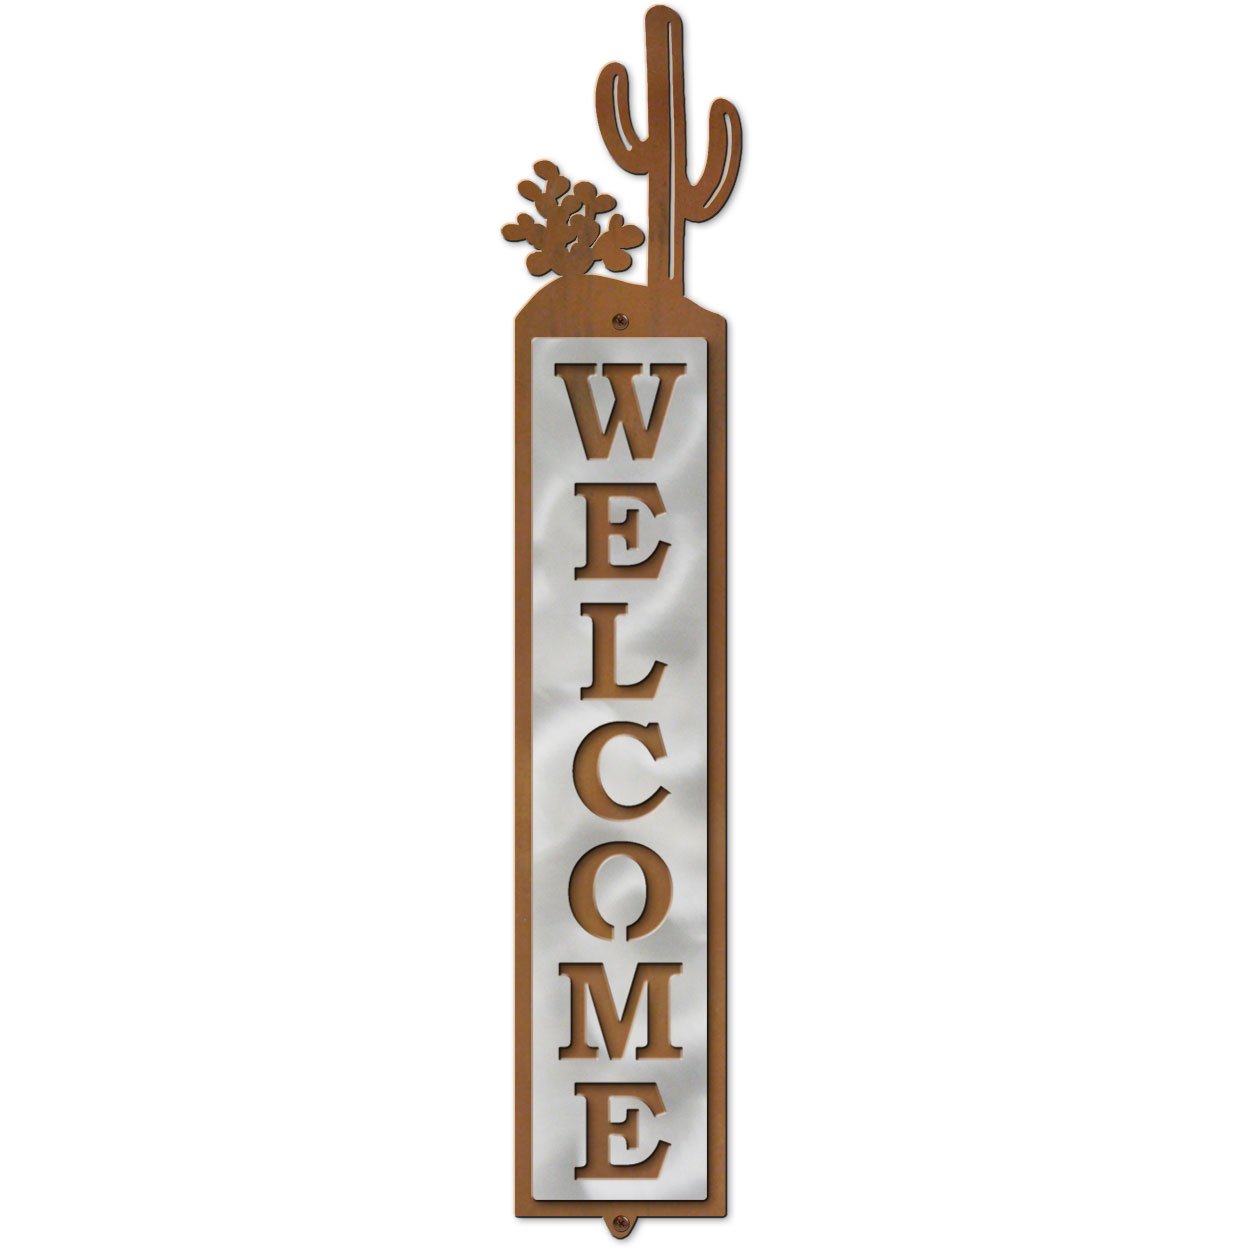 605048 - Cactus Metal Art Vertical Welcome Sign